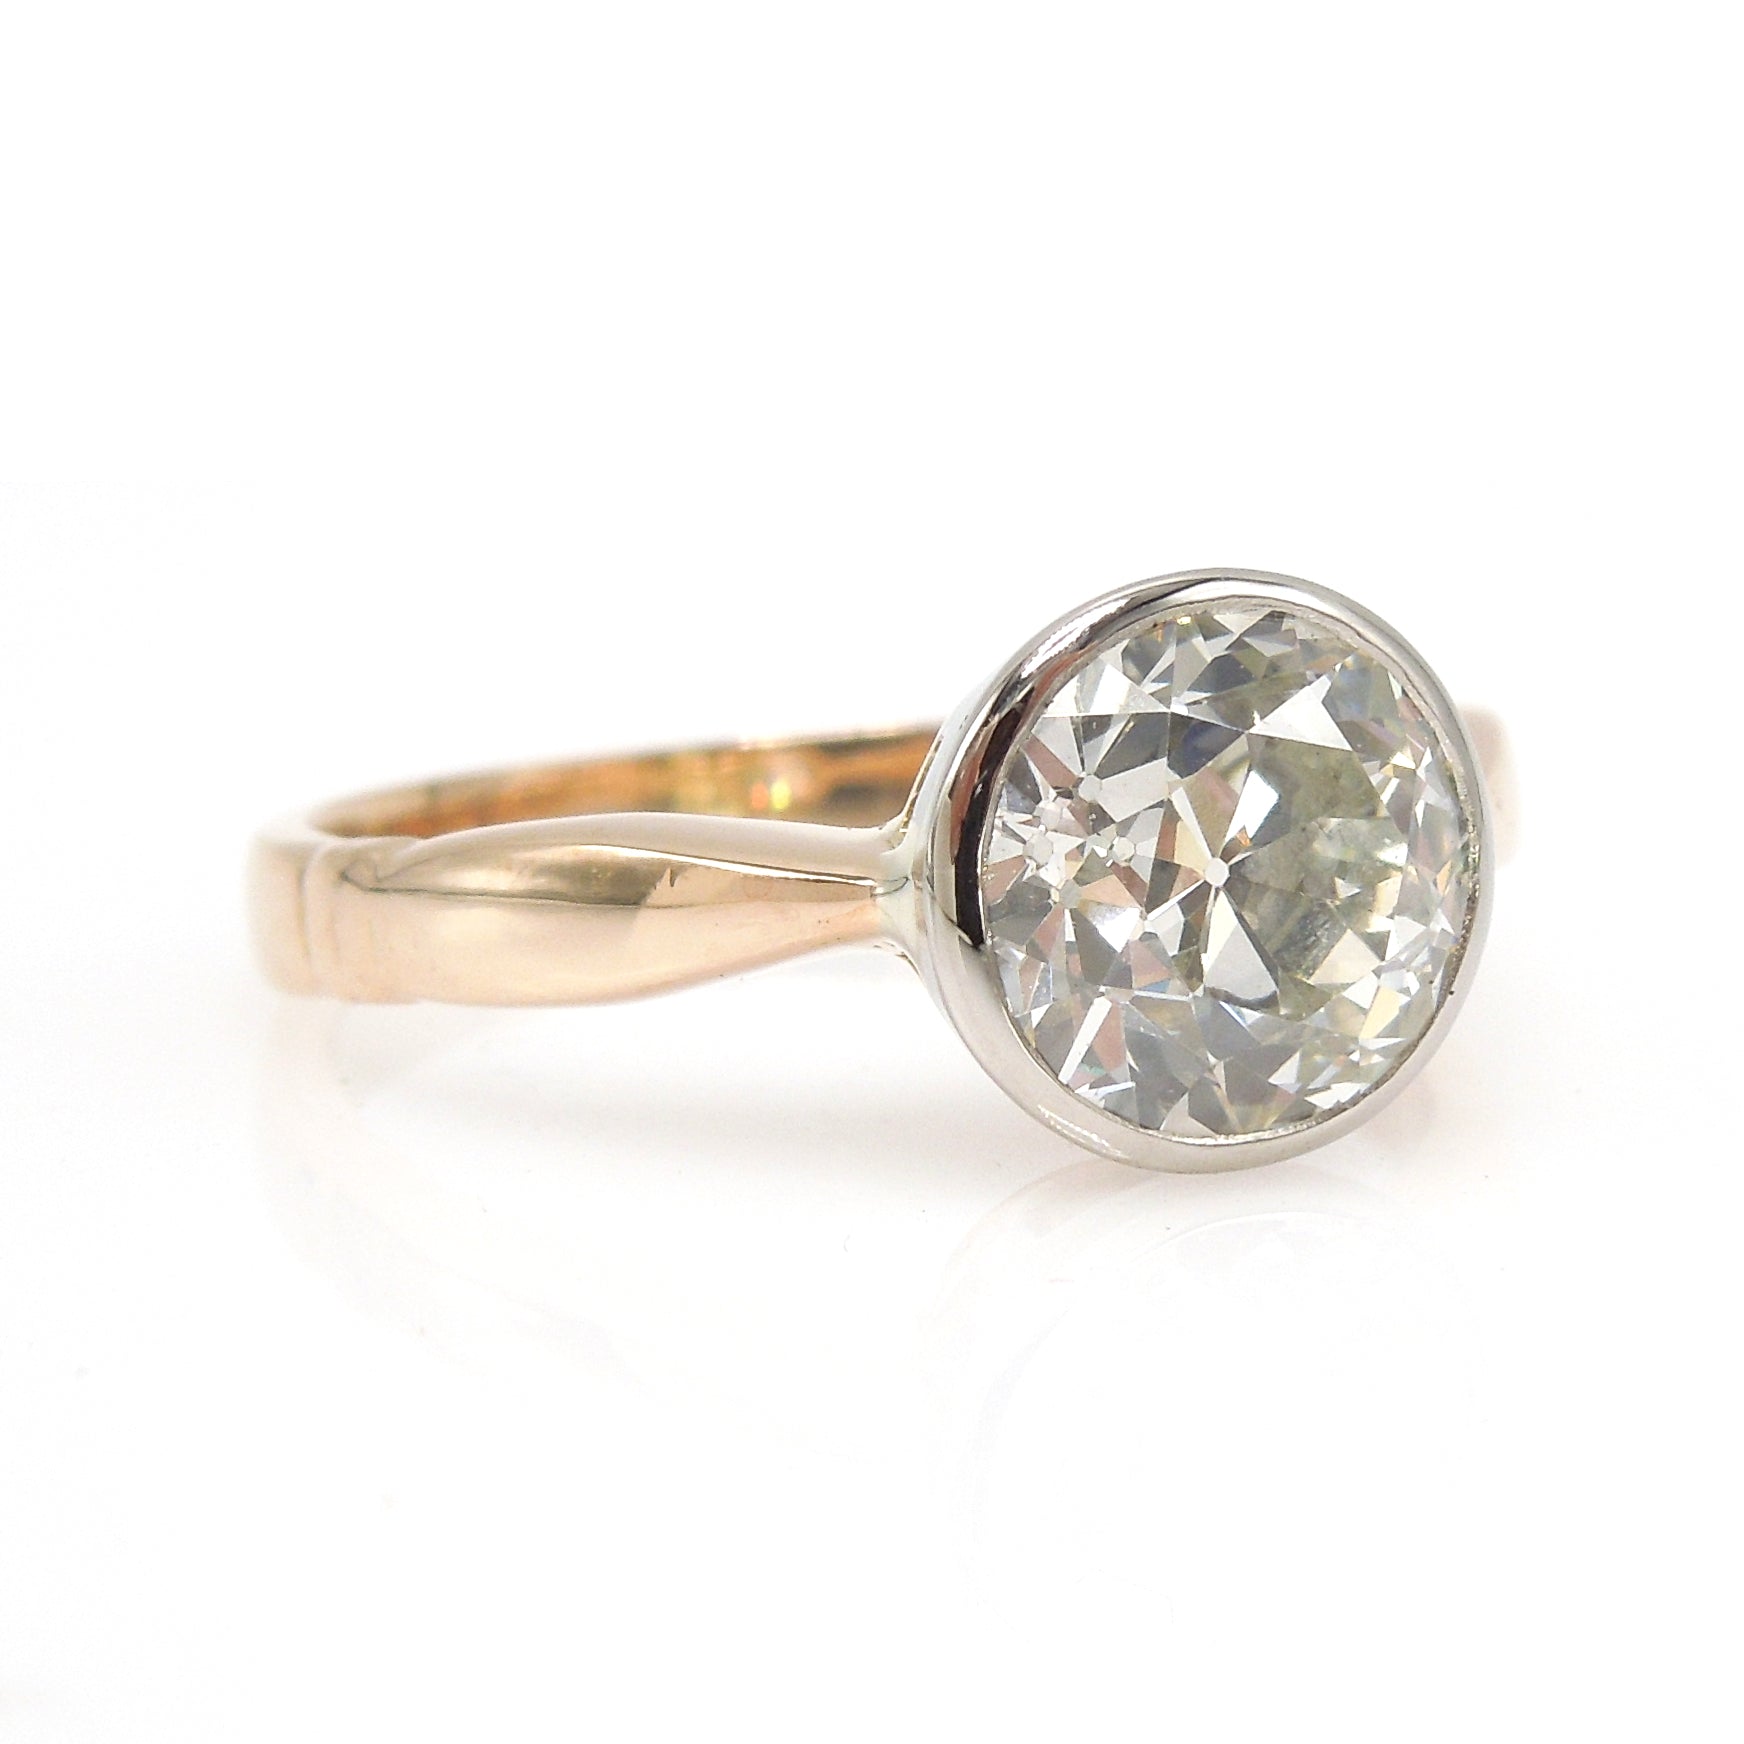 1.75ct Old European Cut Bezel Set Diamond Solitaire Engagement Ring in Platinum & 14K Yellow Gold